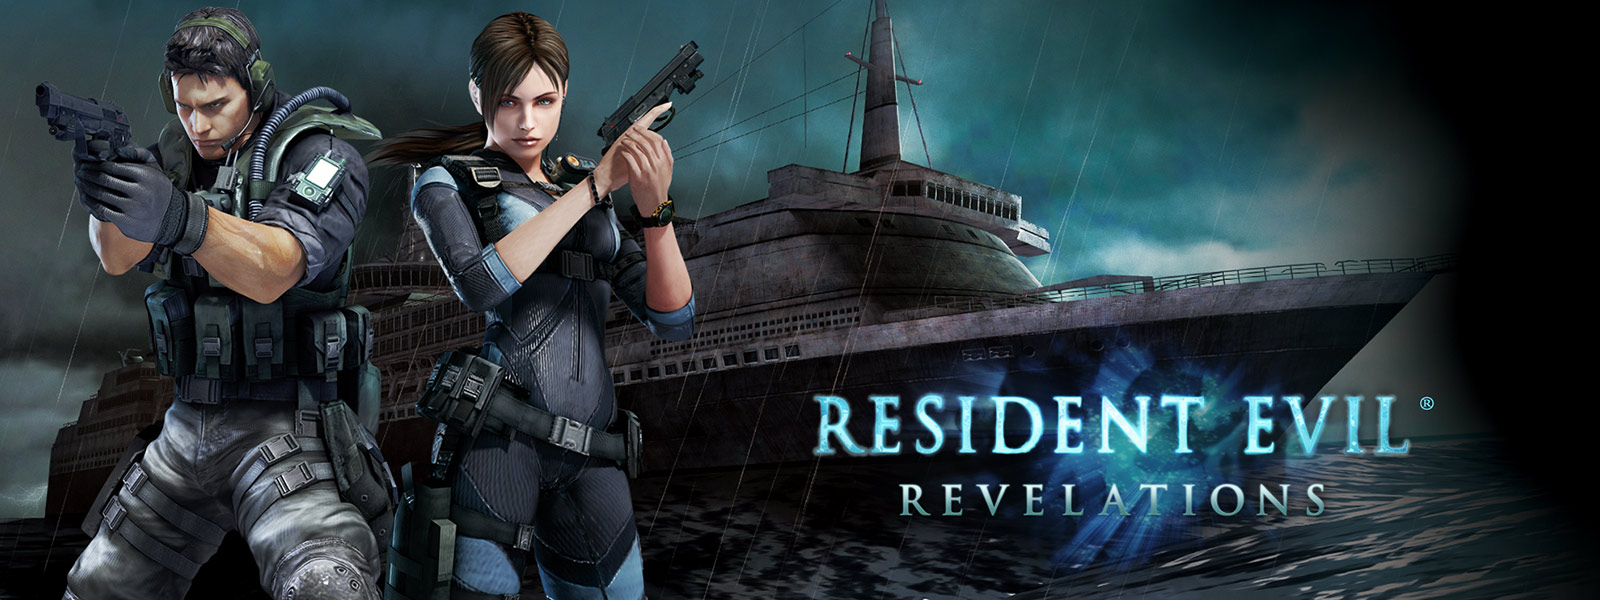 Resident Evil Revelations，2 個角色拿著手槍在看起來很可怕的遊輪前方